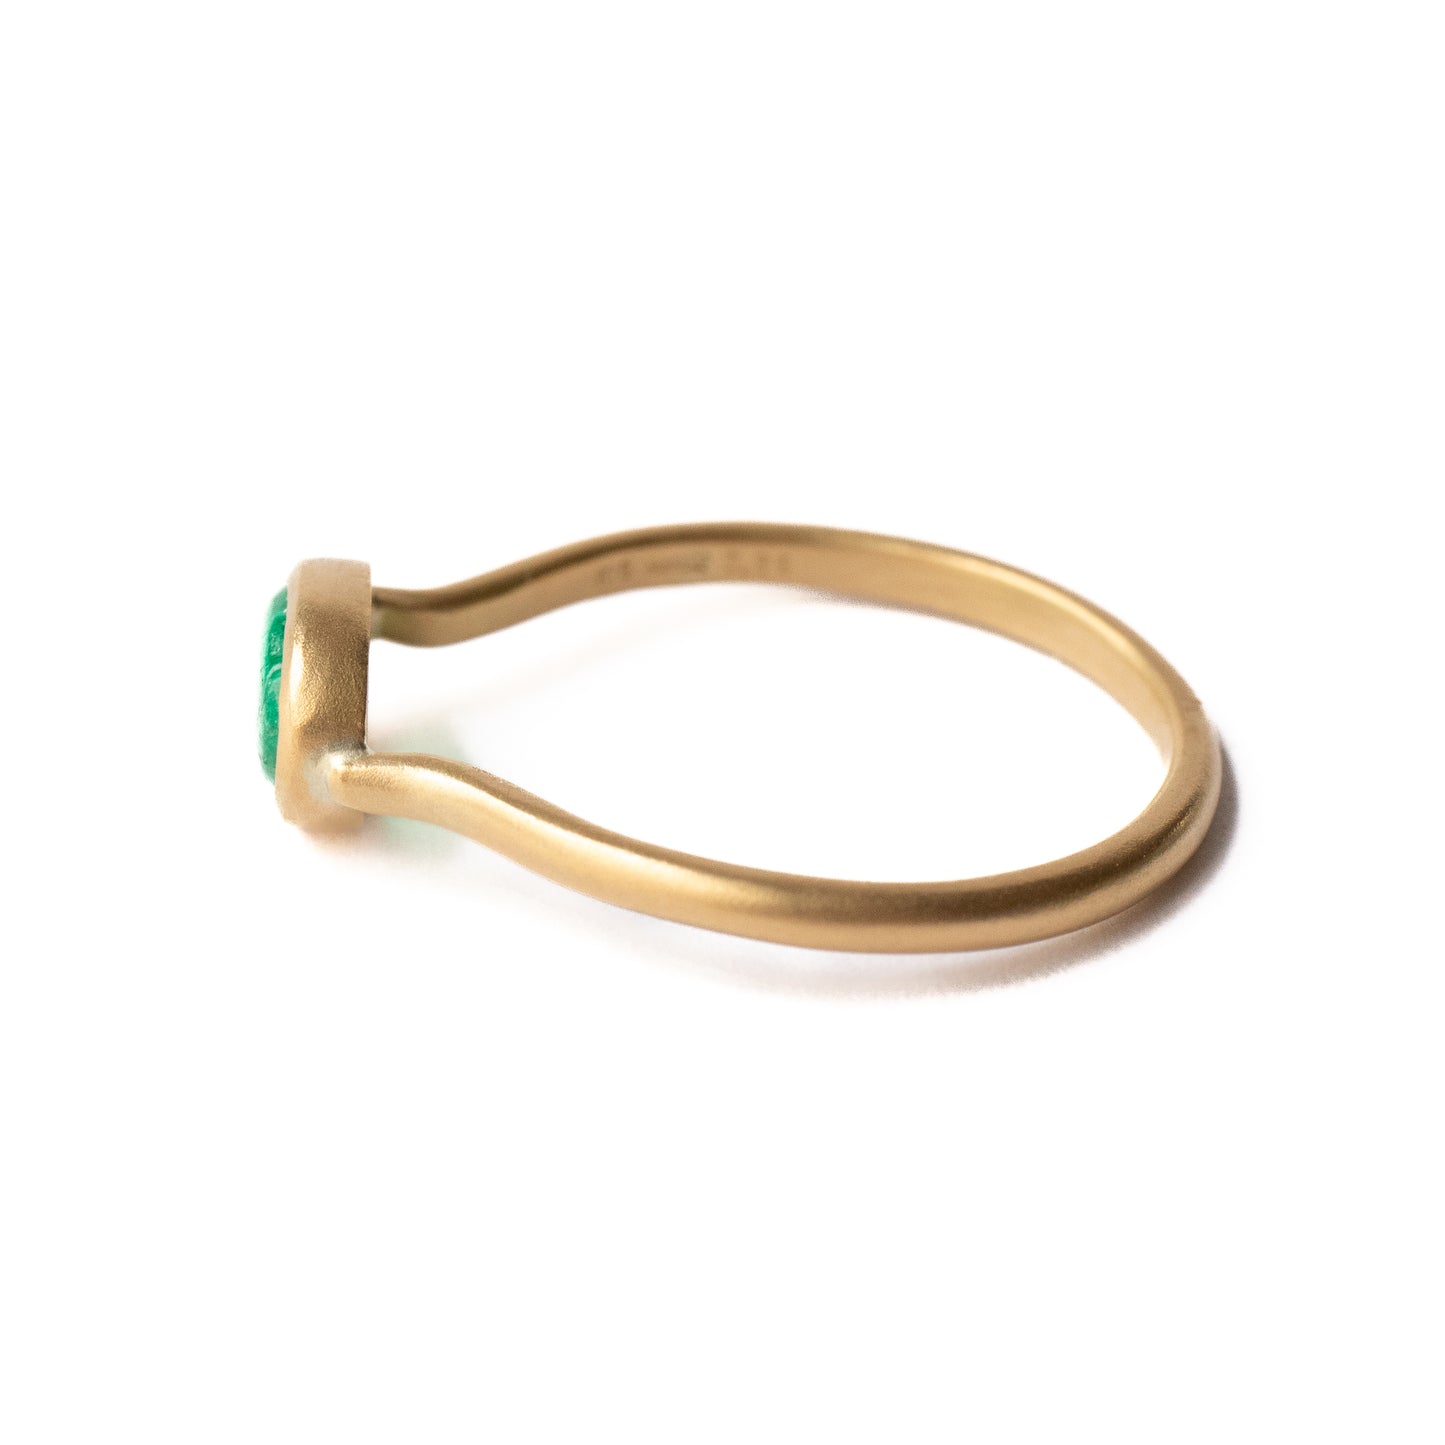 Collet Ring - Emerald (Bicolor) -